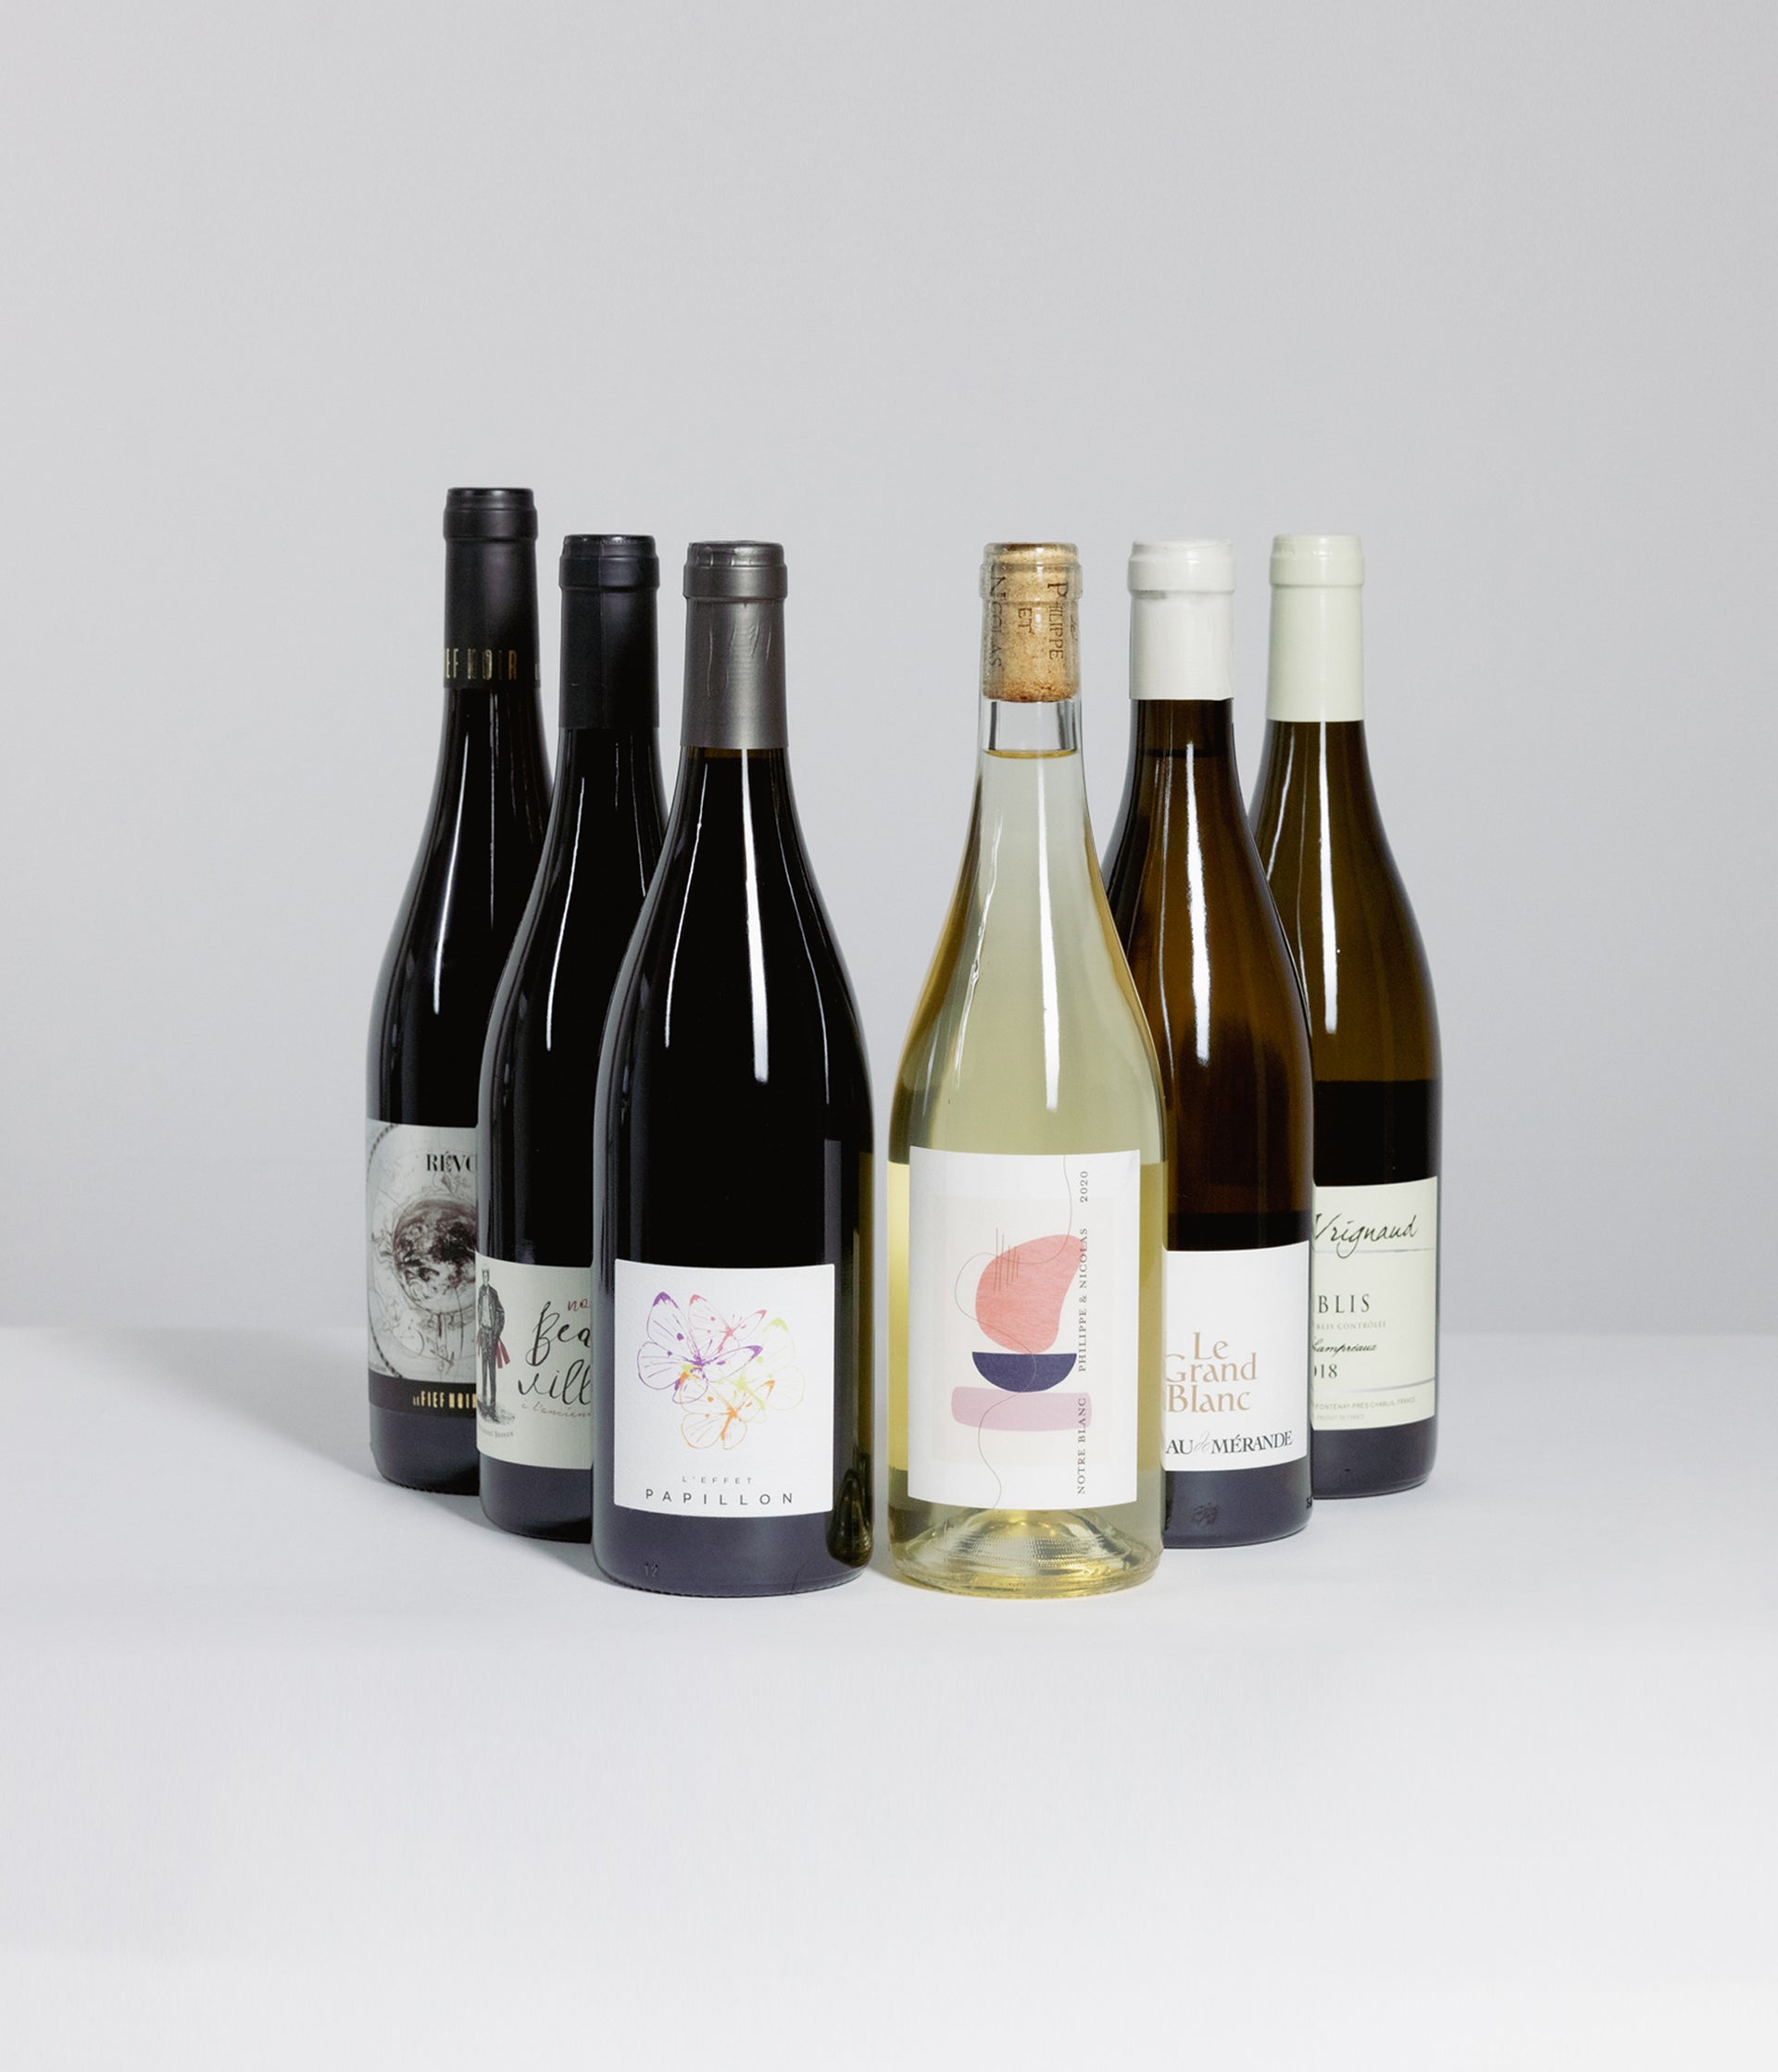 Mini Wine Bottle and Wine Bottle Size - Glass bottle manufacturer